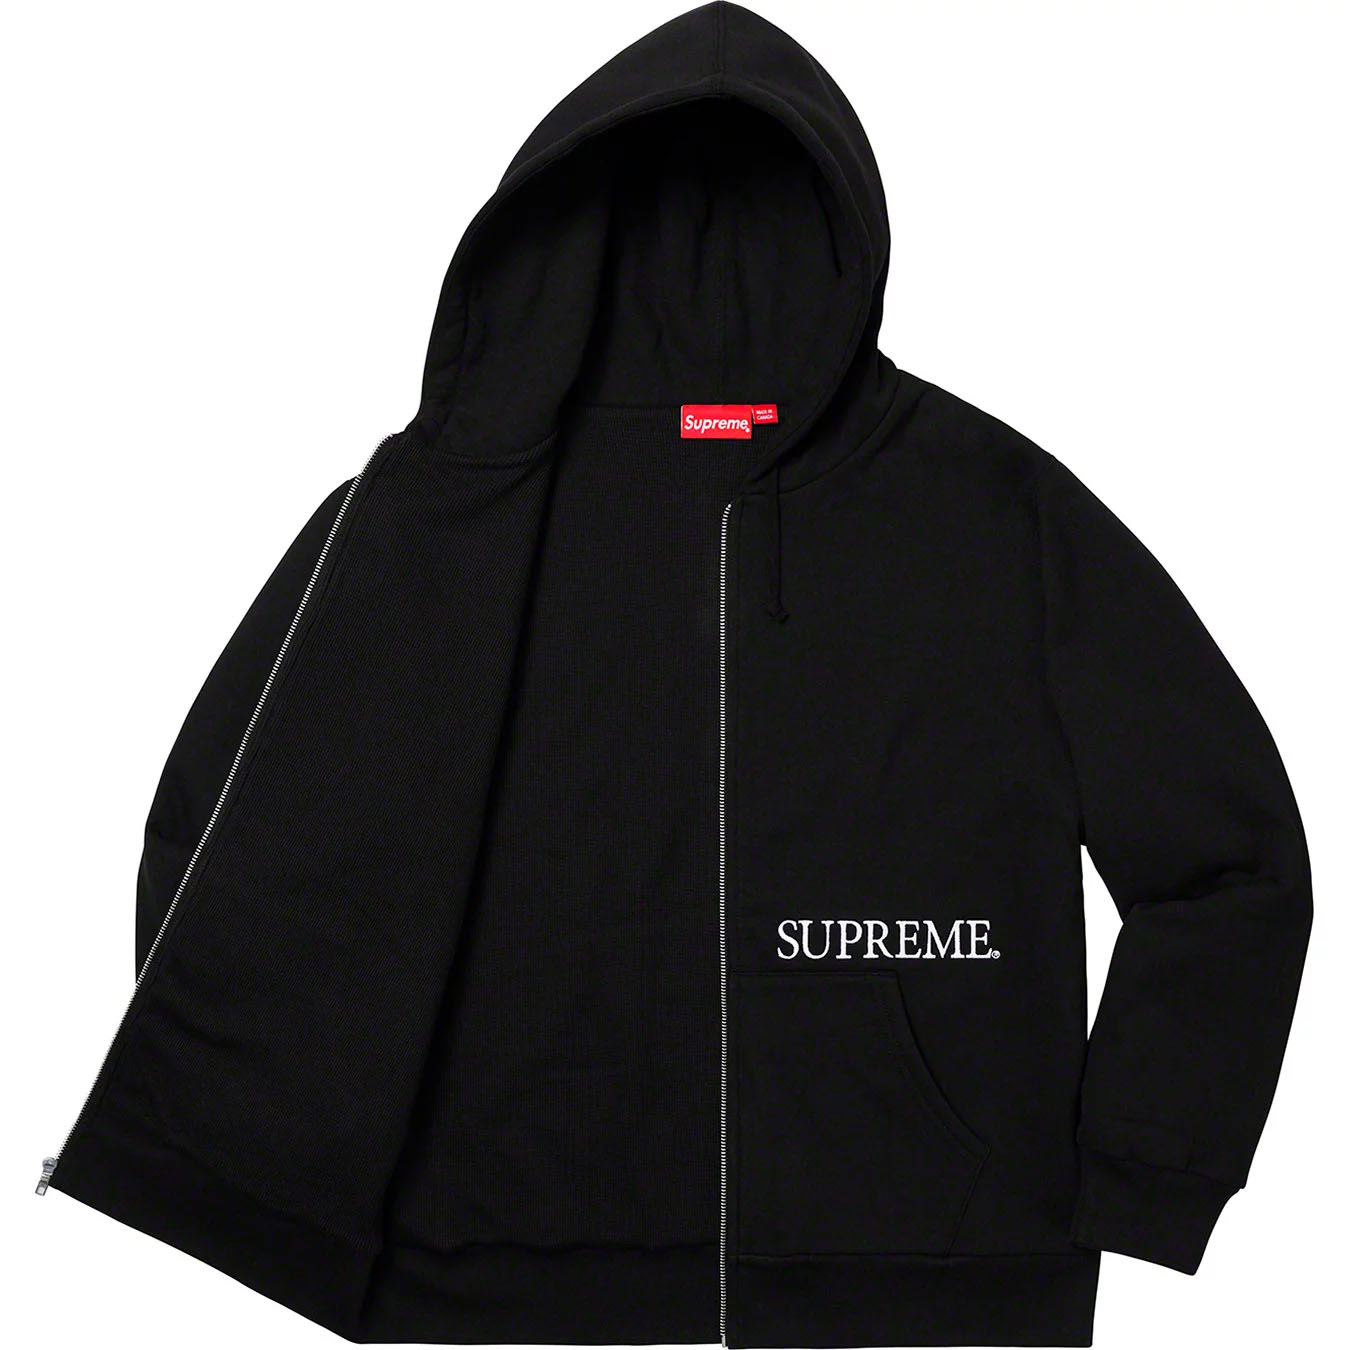 Supreme Thermal Zip Up Hooded Sweatshirt